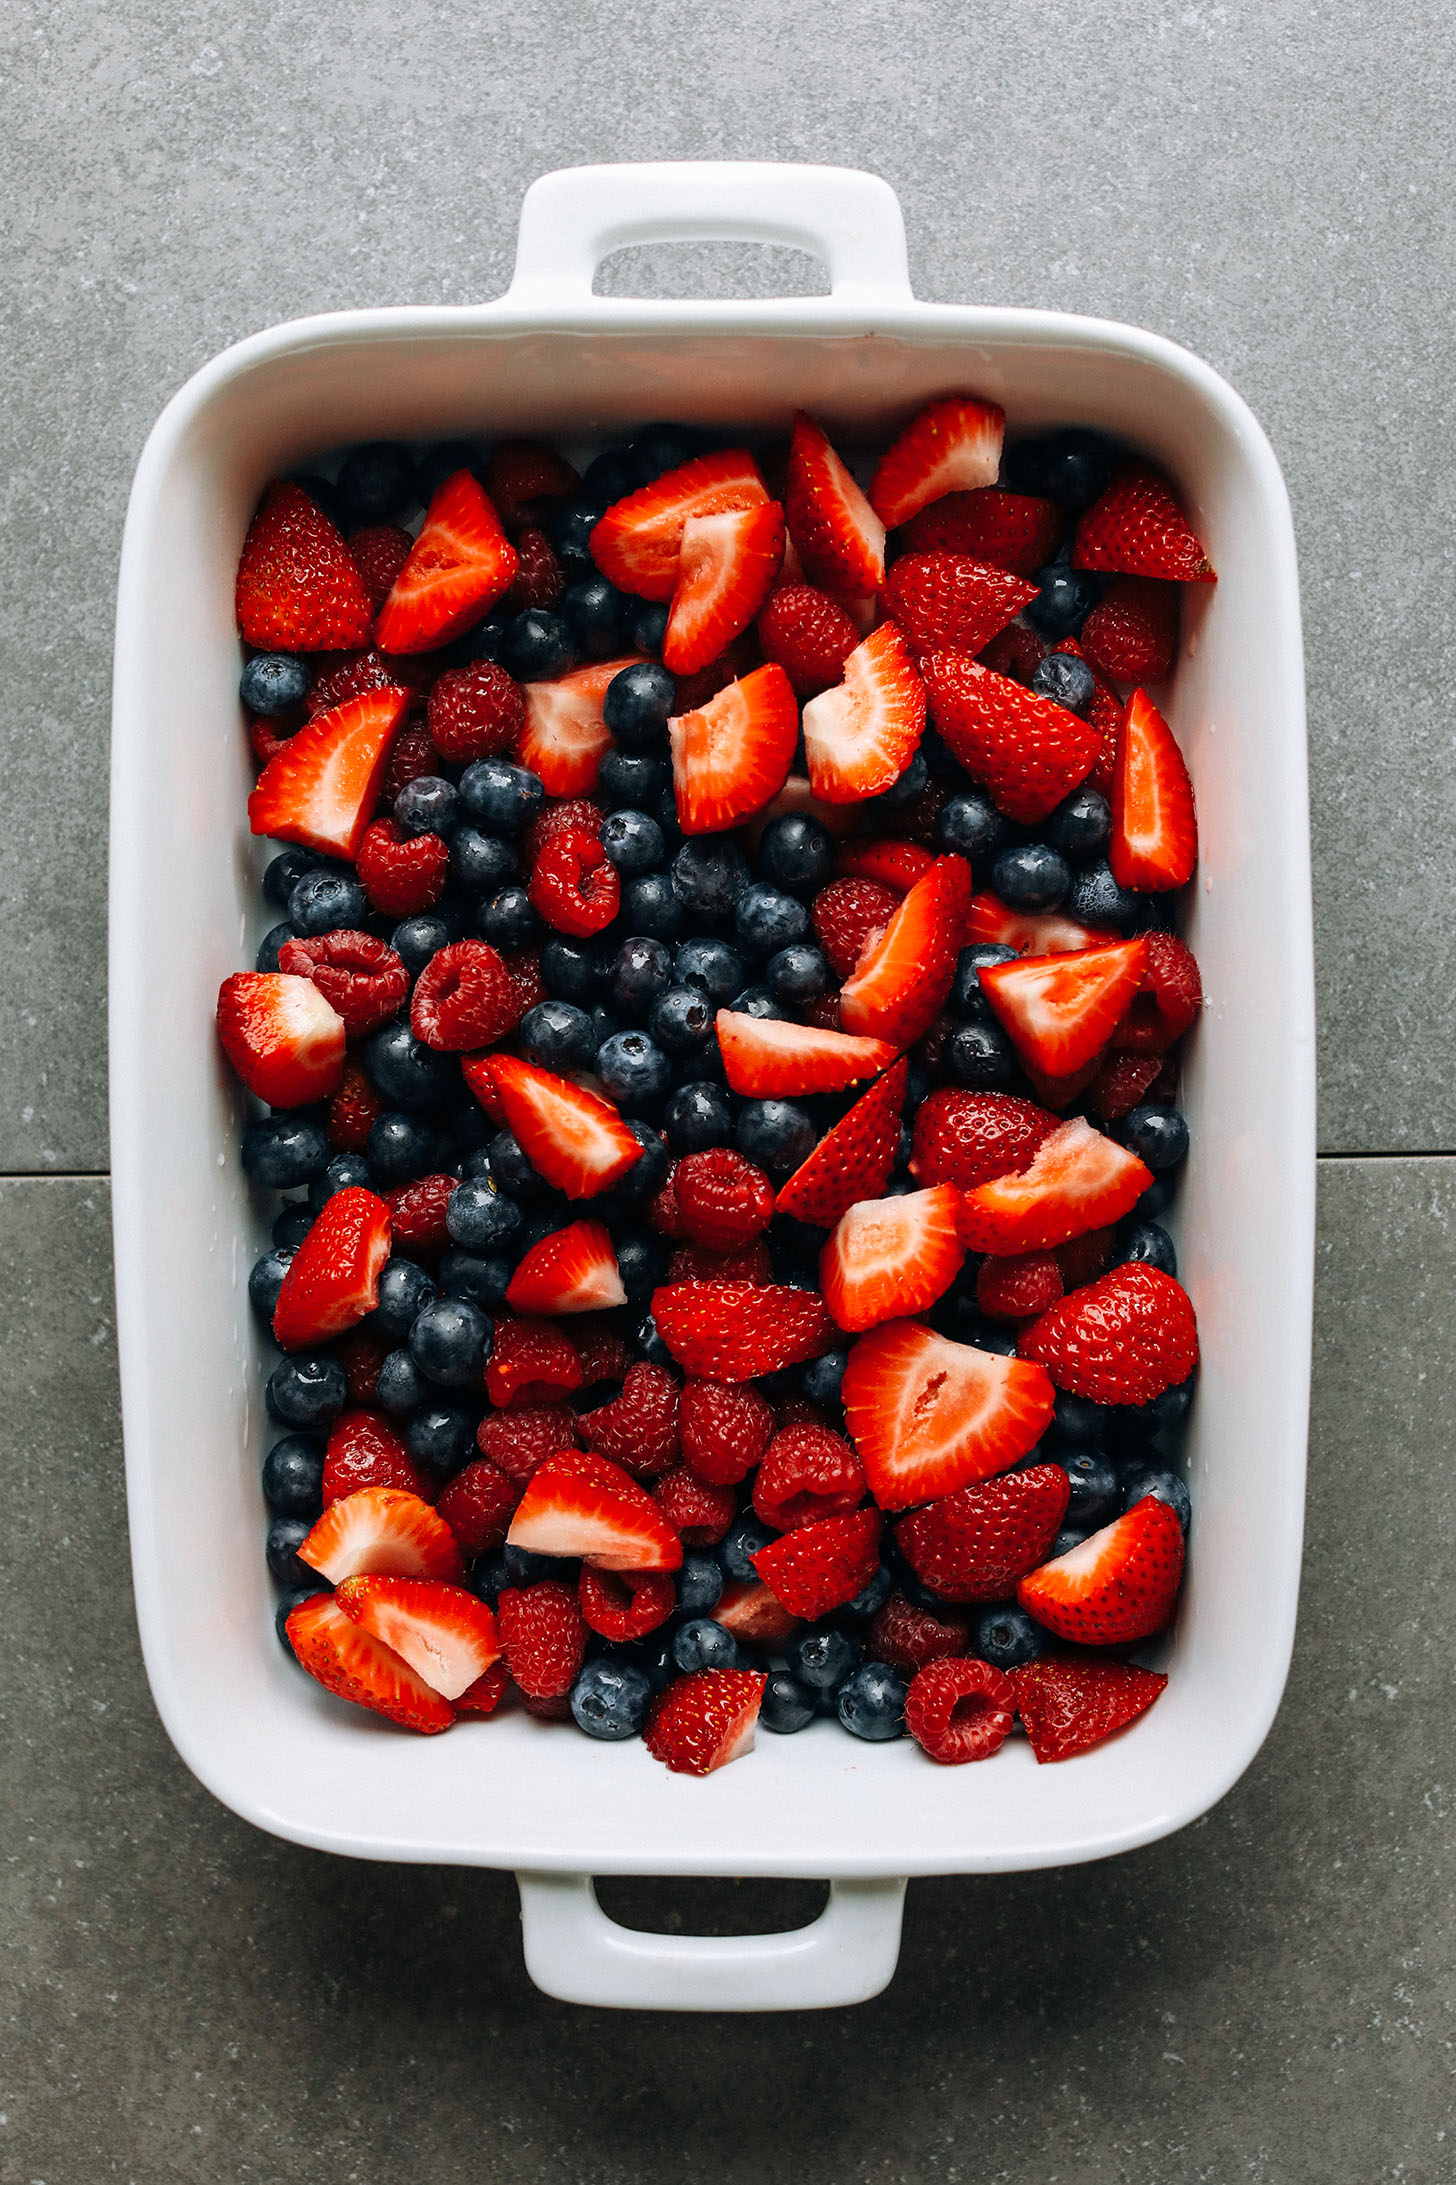 Fresh blueberries, raspberries, and strawberries in a ceramic baking dish